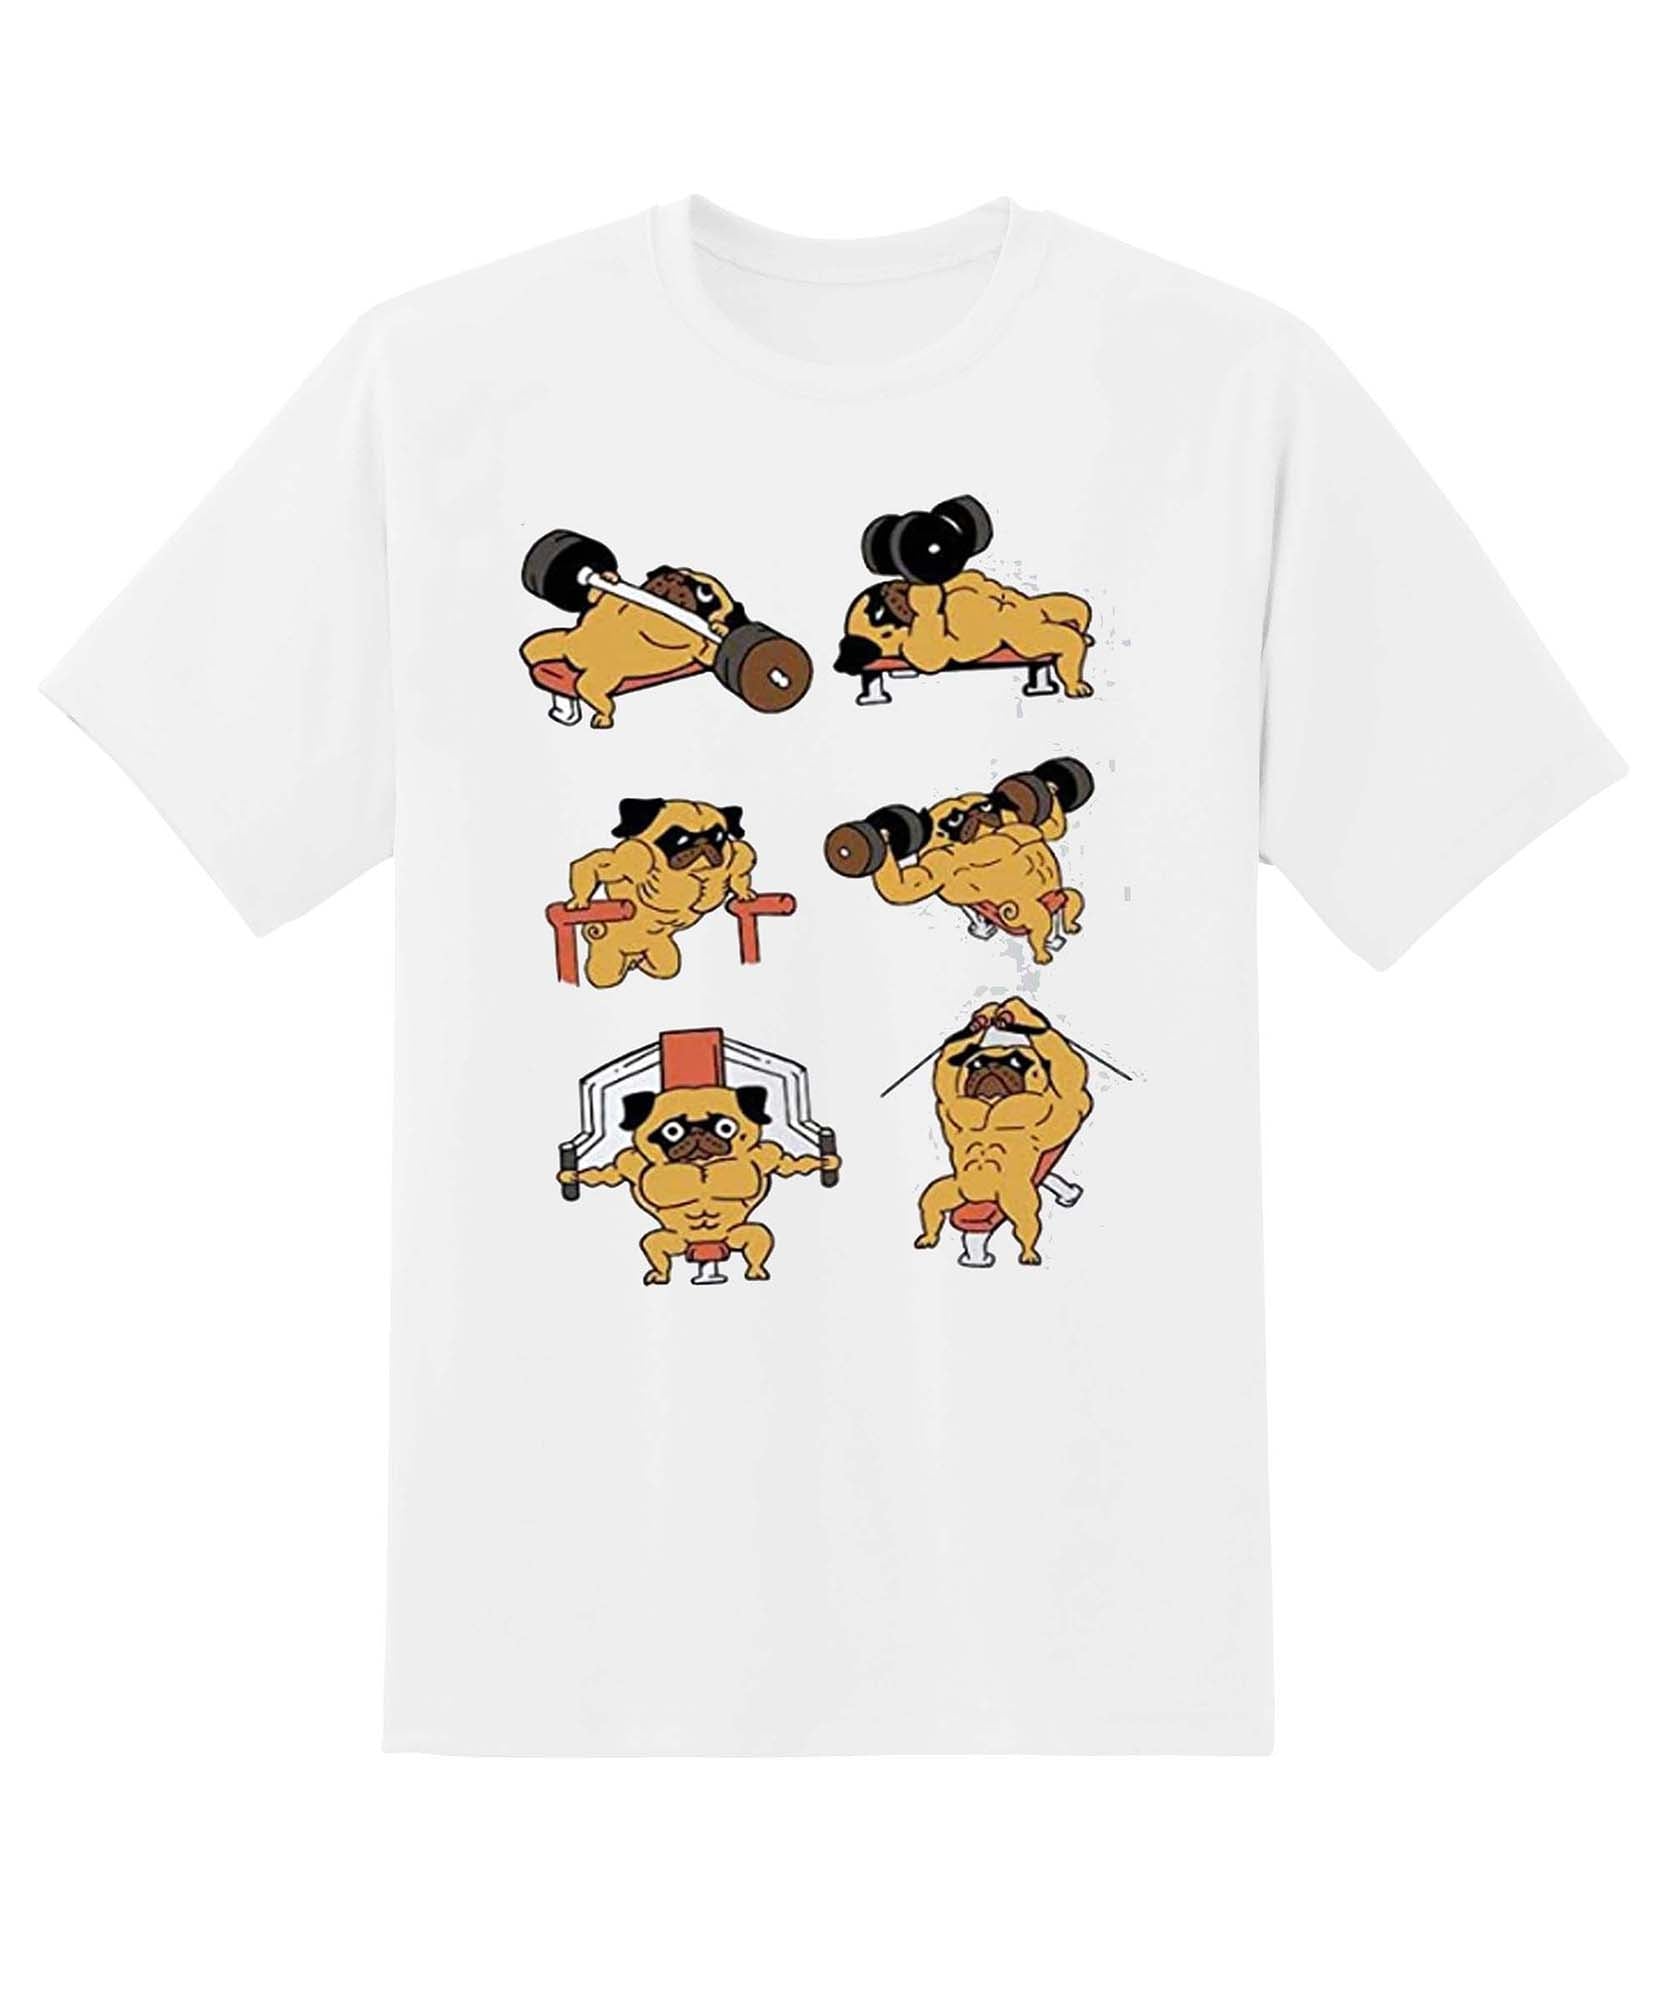 Skitongift Pug Dog Body Building Muscle Pug Dog Funny Shirts Hoodie Sweater Short Sleeve Casual Shirt